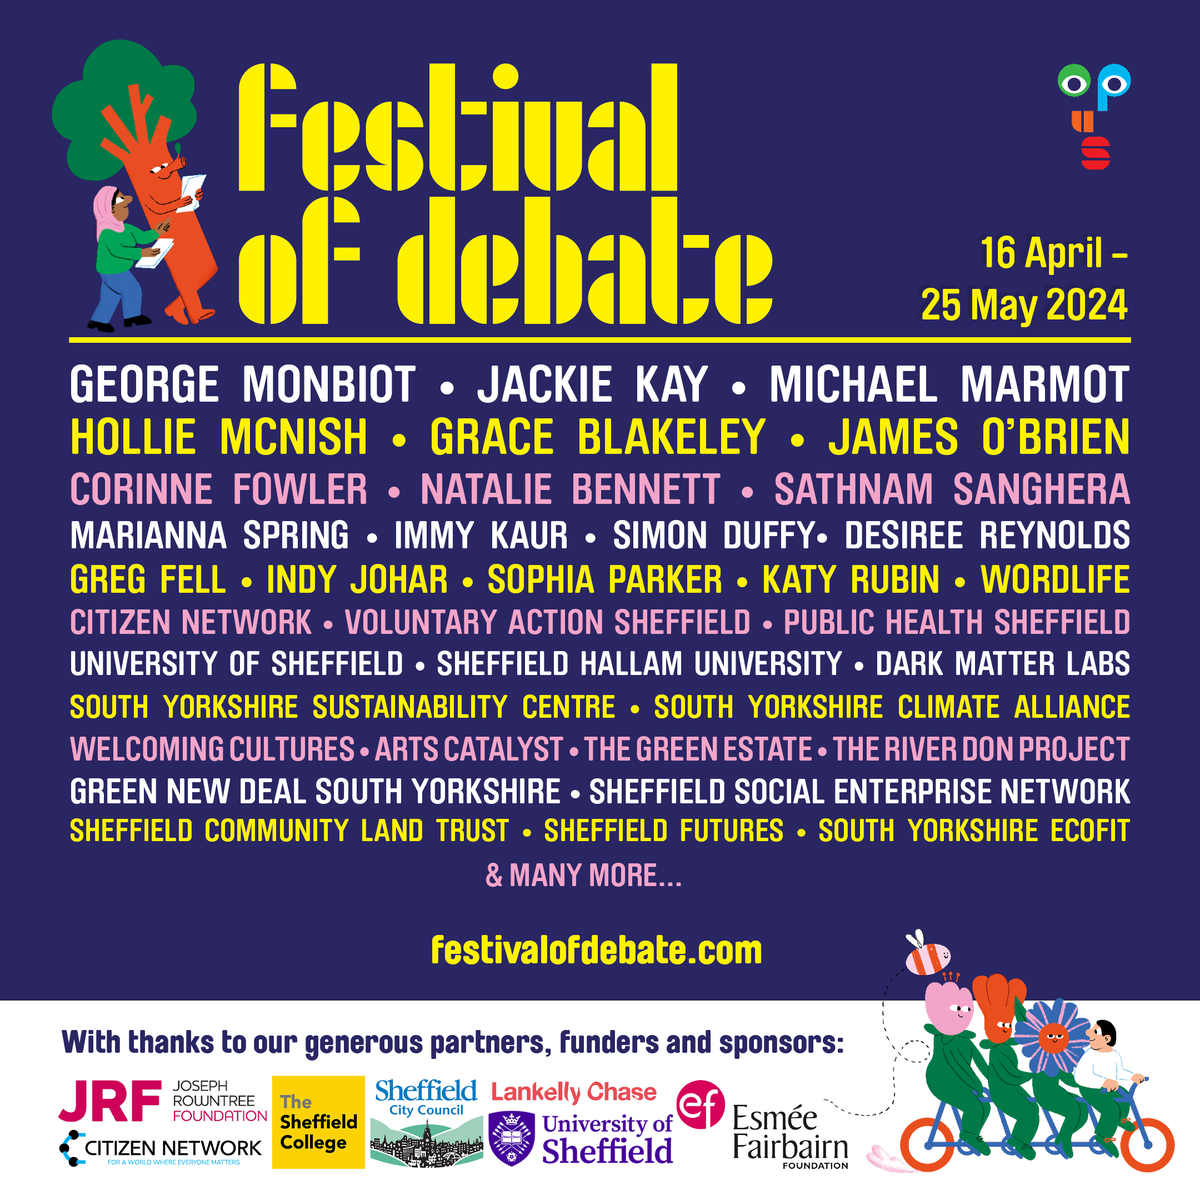 🎉 PROGRAMME LAUNCH - Festival of Debate returns to #Sheffield from 16 April - 25 May! Featuring @Sathnam Sanghera, @holliepoetry, @mrjamesob, @graceblakeley, @mariannaspring, @JackieKayPoet, @GeorgeMonbiot, @natalieben & more. See the full programme at festivalofdebate.com